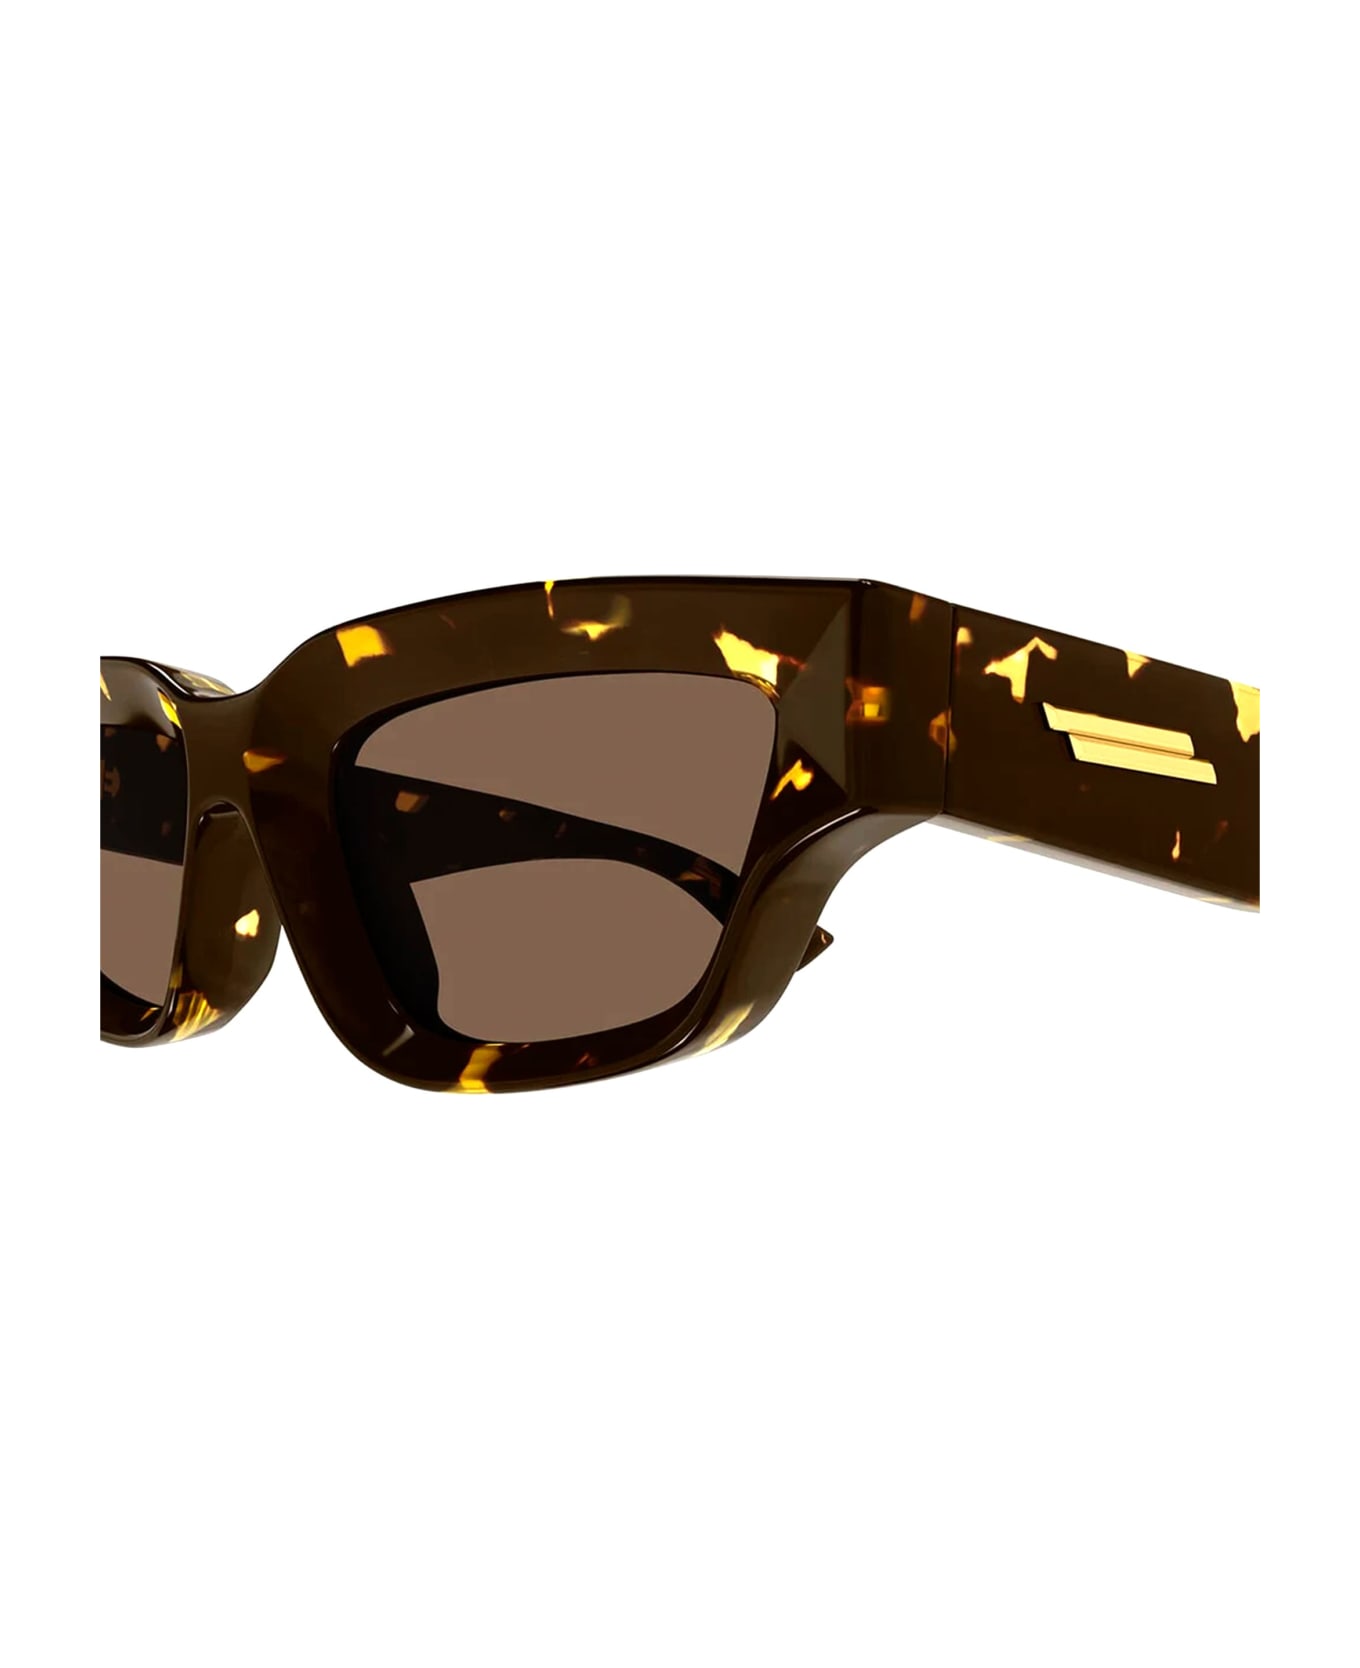 Bottega Veneta Eyewear Bv1250s-002 - Tortoise Sunglasses - Tortoise